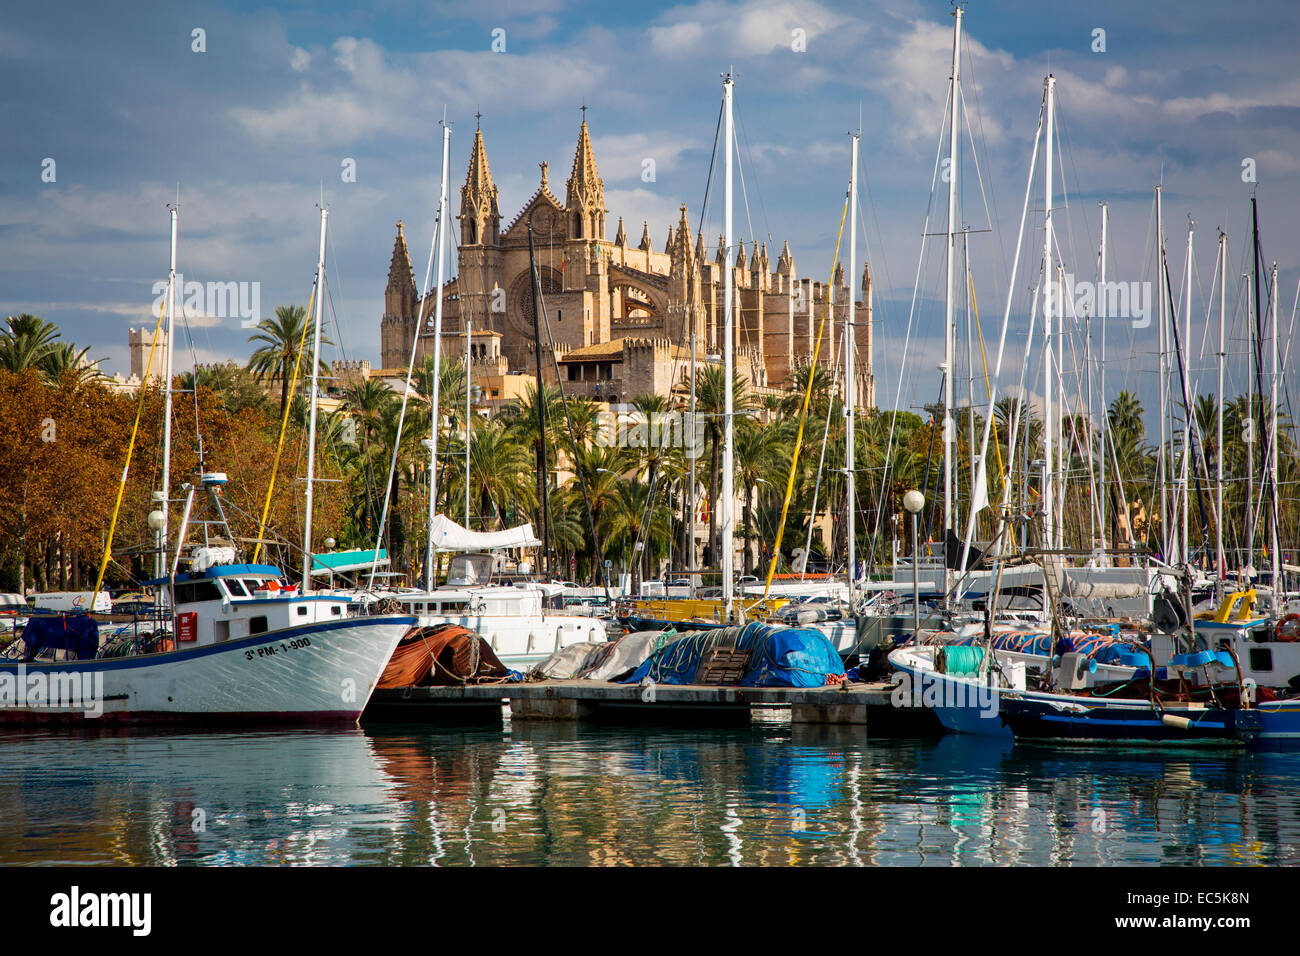 Boats in the marina below Cathedral of Palma de Mallorca, Spain Stock Photo